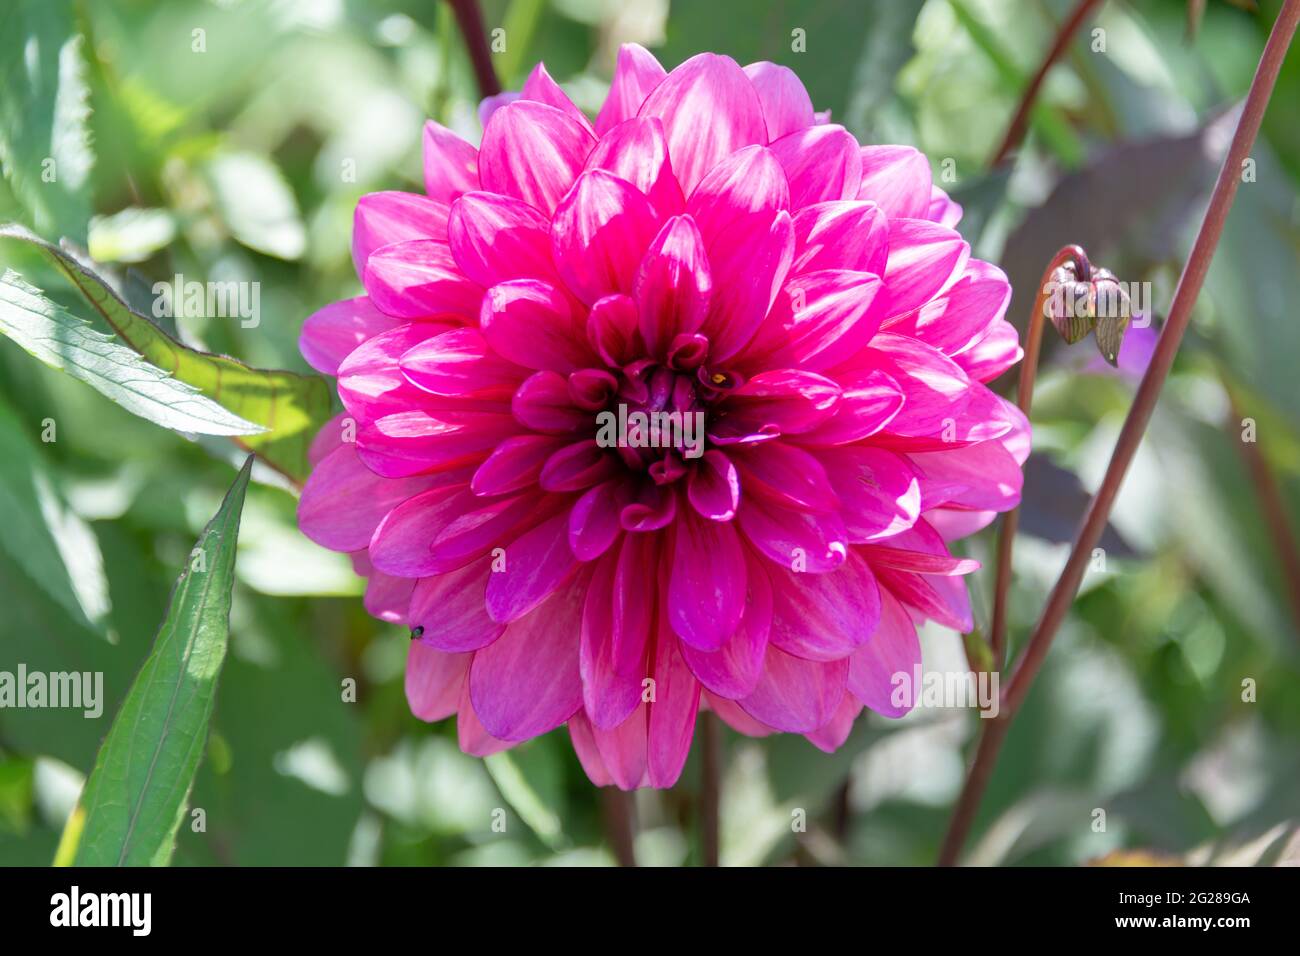 Vivid pink dalhia flower close up Stock Photo